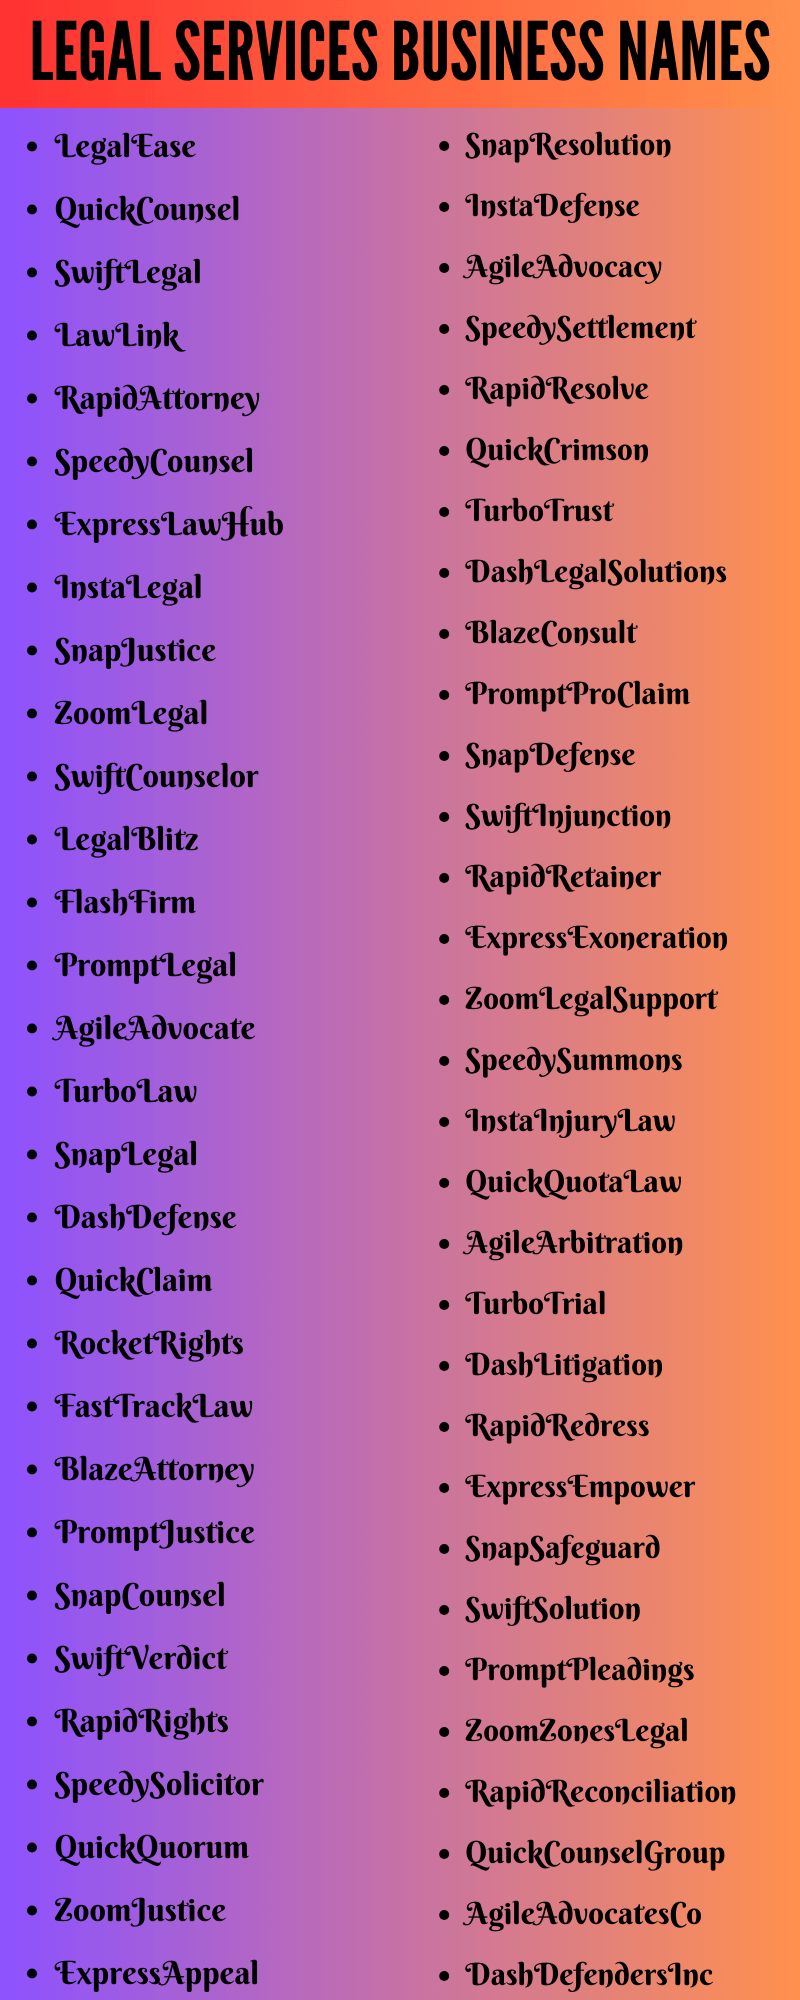 Legal Services Business Names